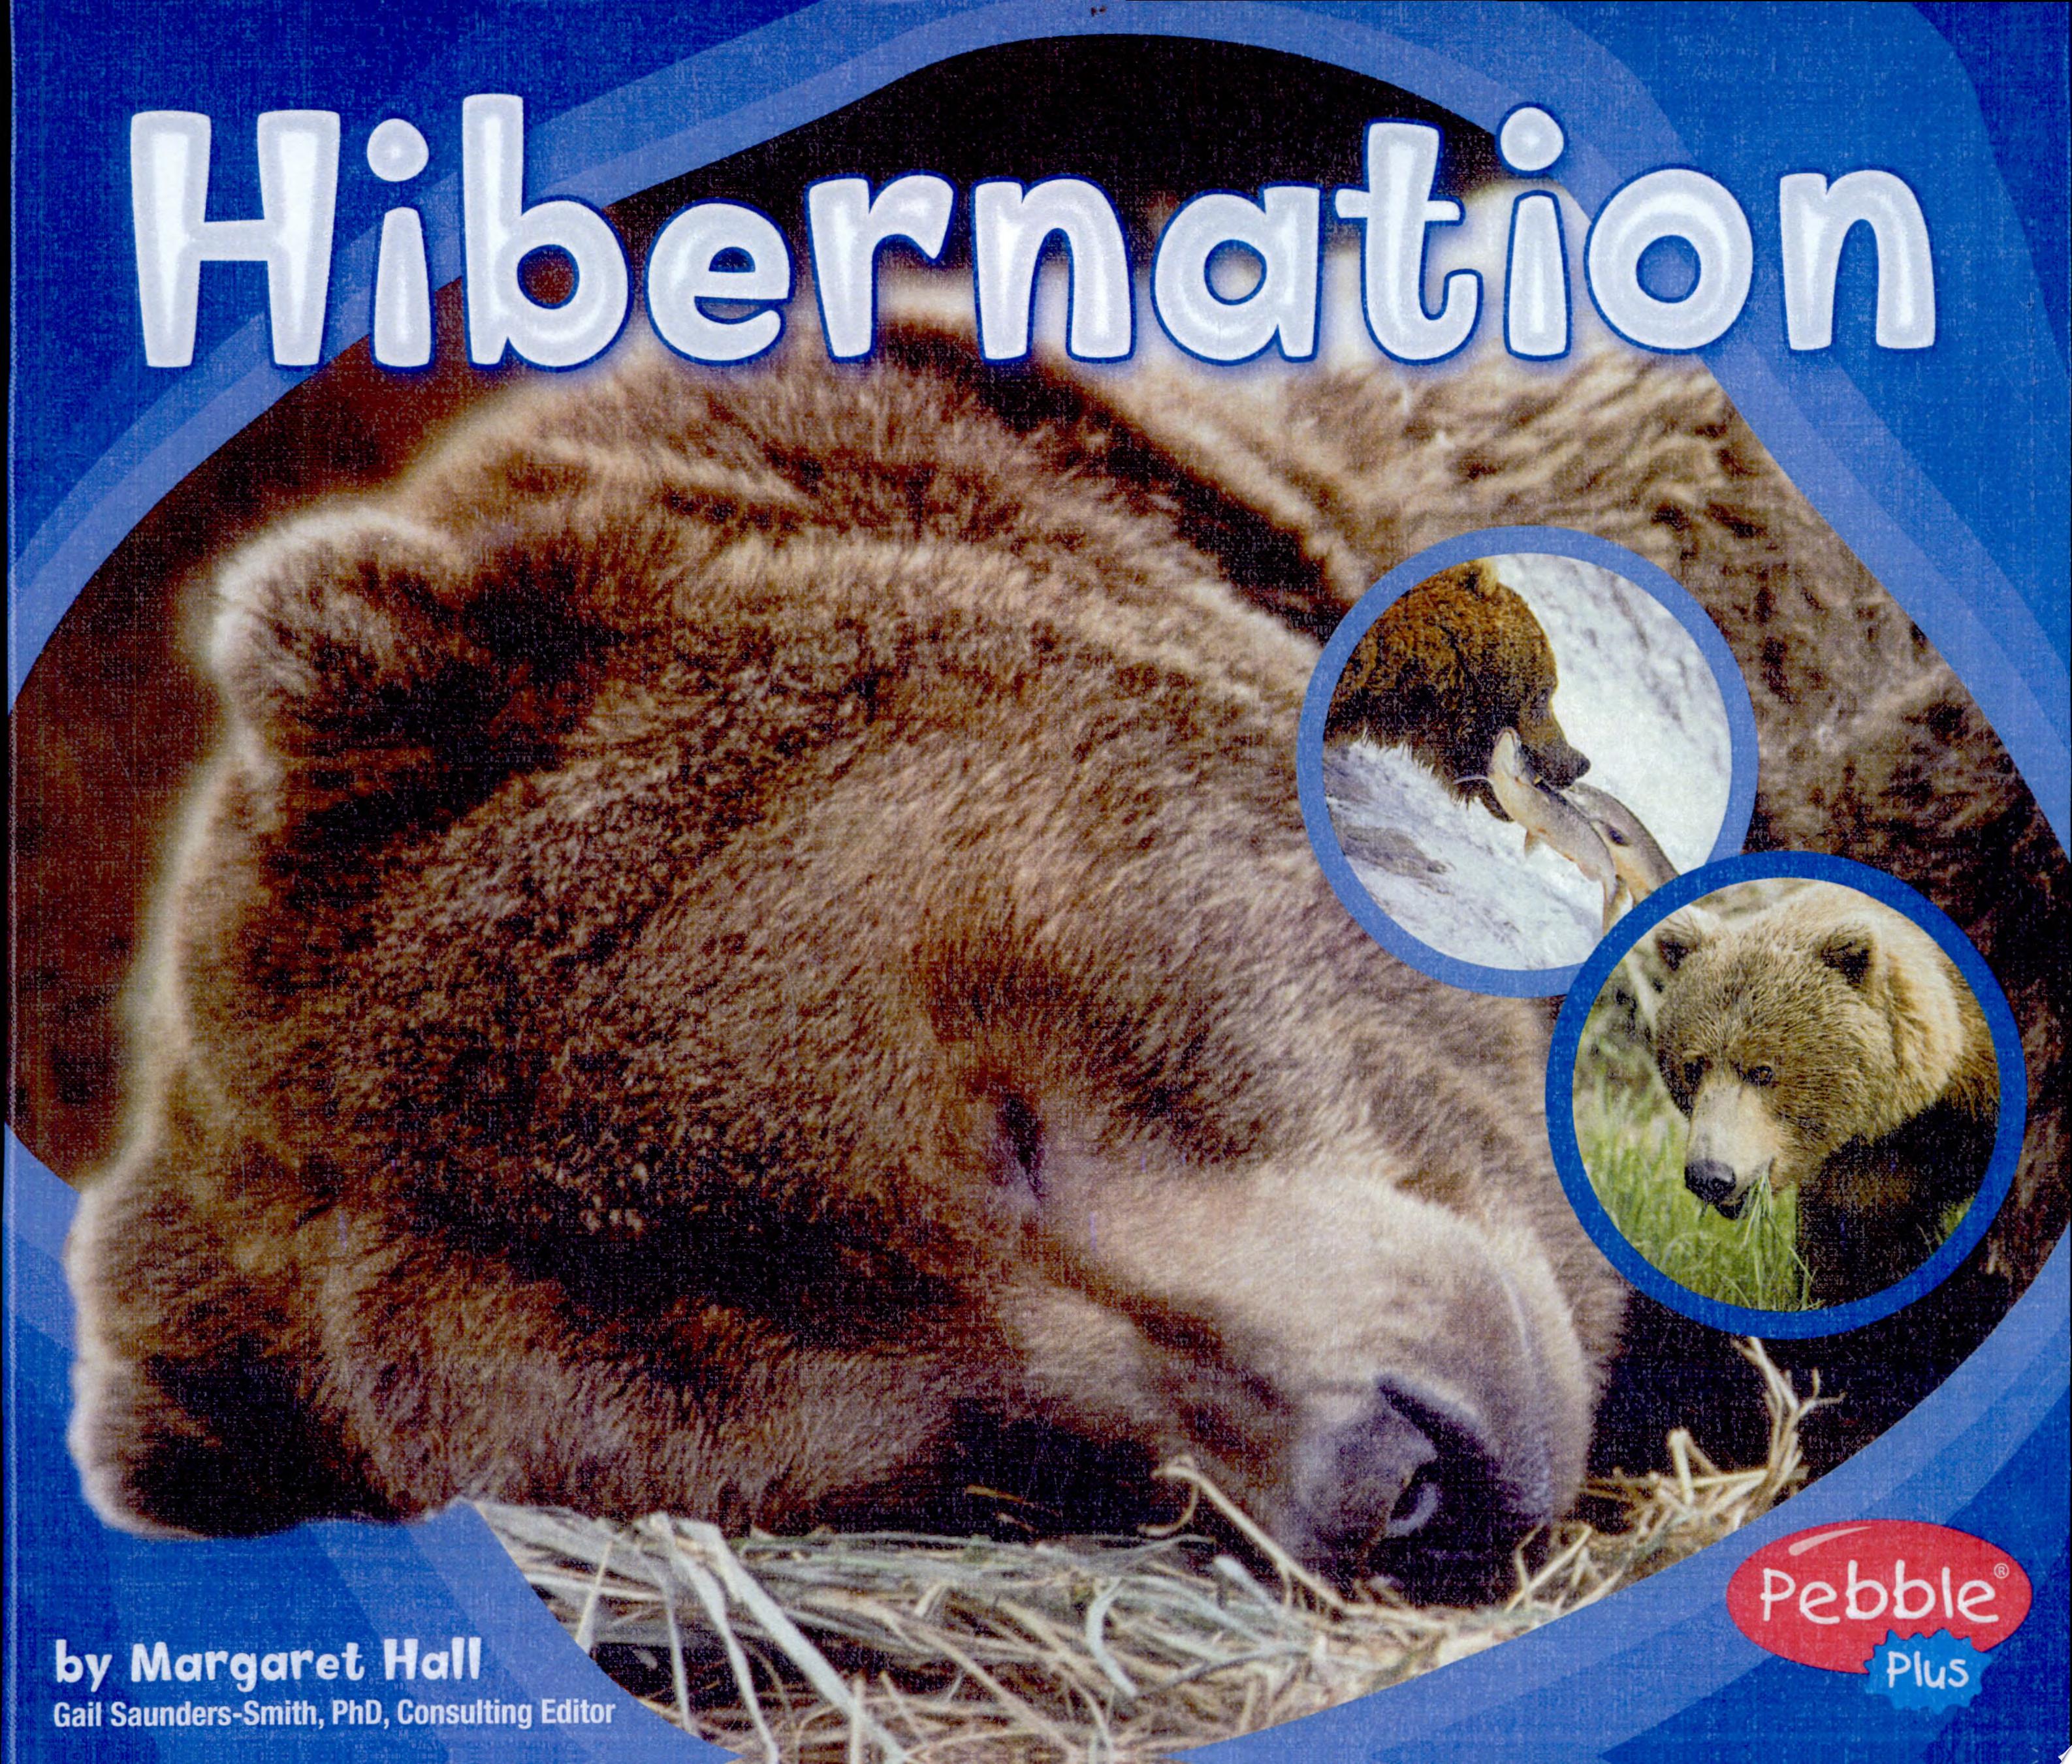 Image for "Hibernation"